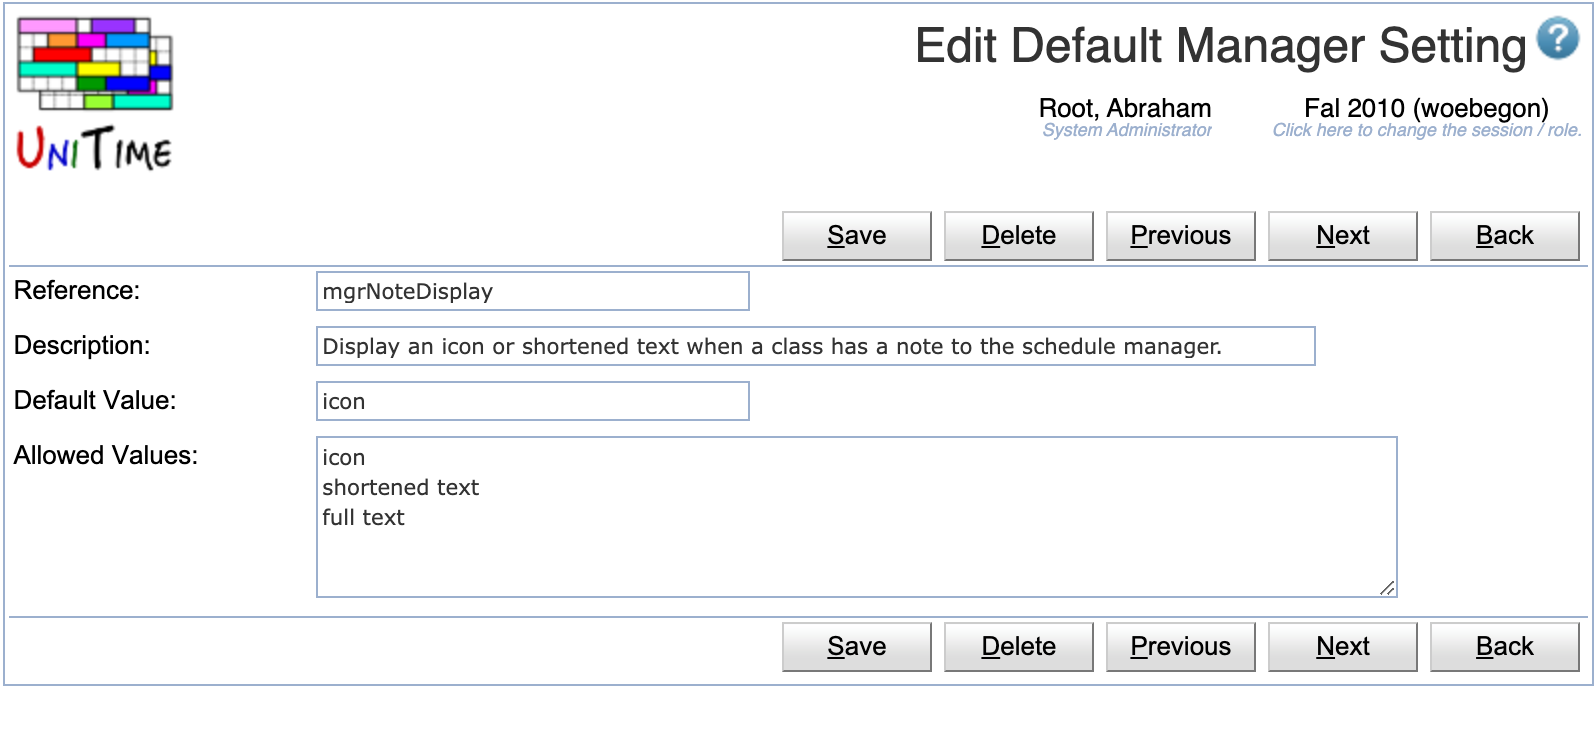 Edit Default Manager Setting